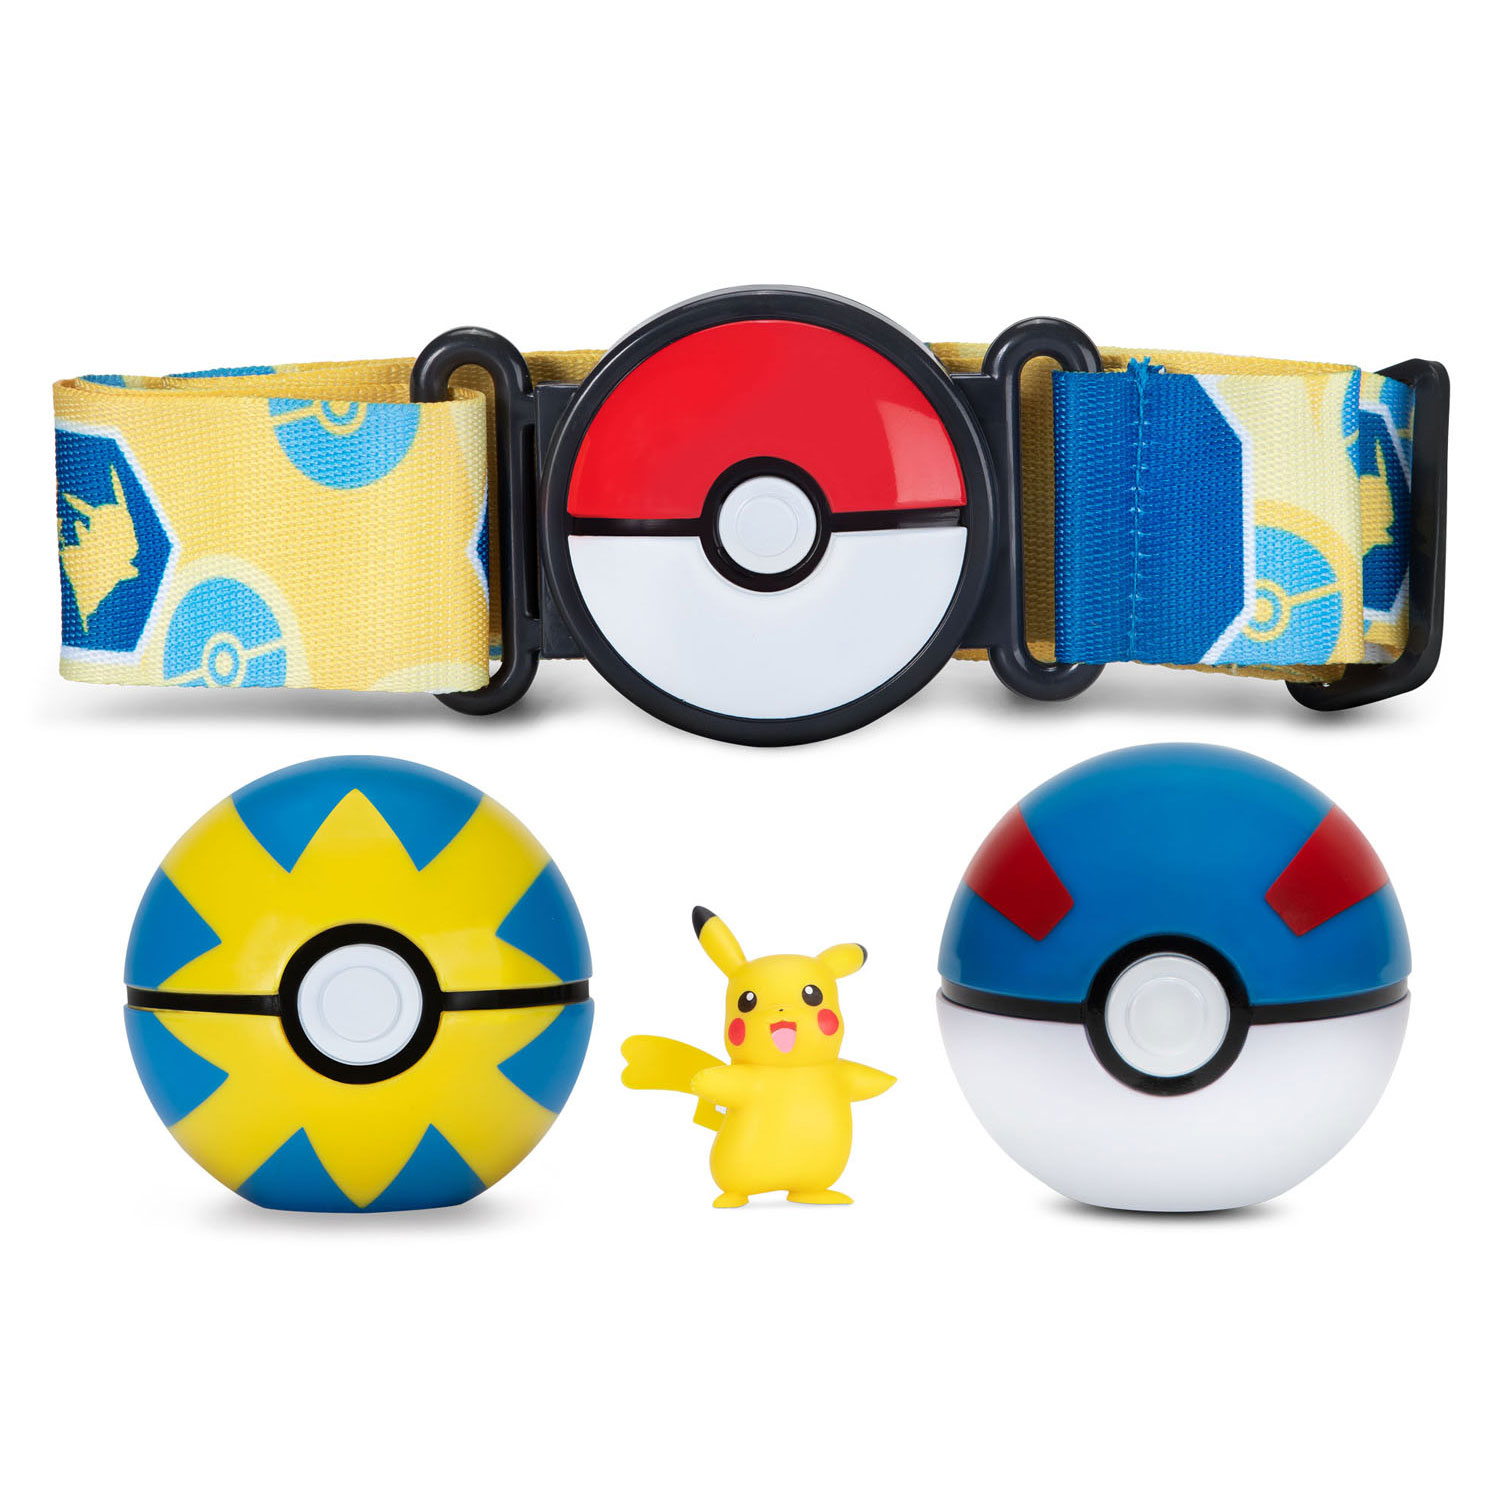 Pokémon Clip 'N Go Pikachu & Poke Ball Set 